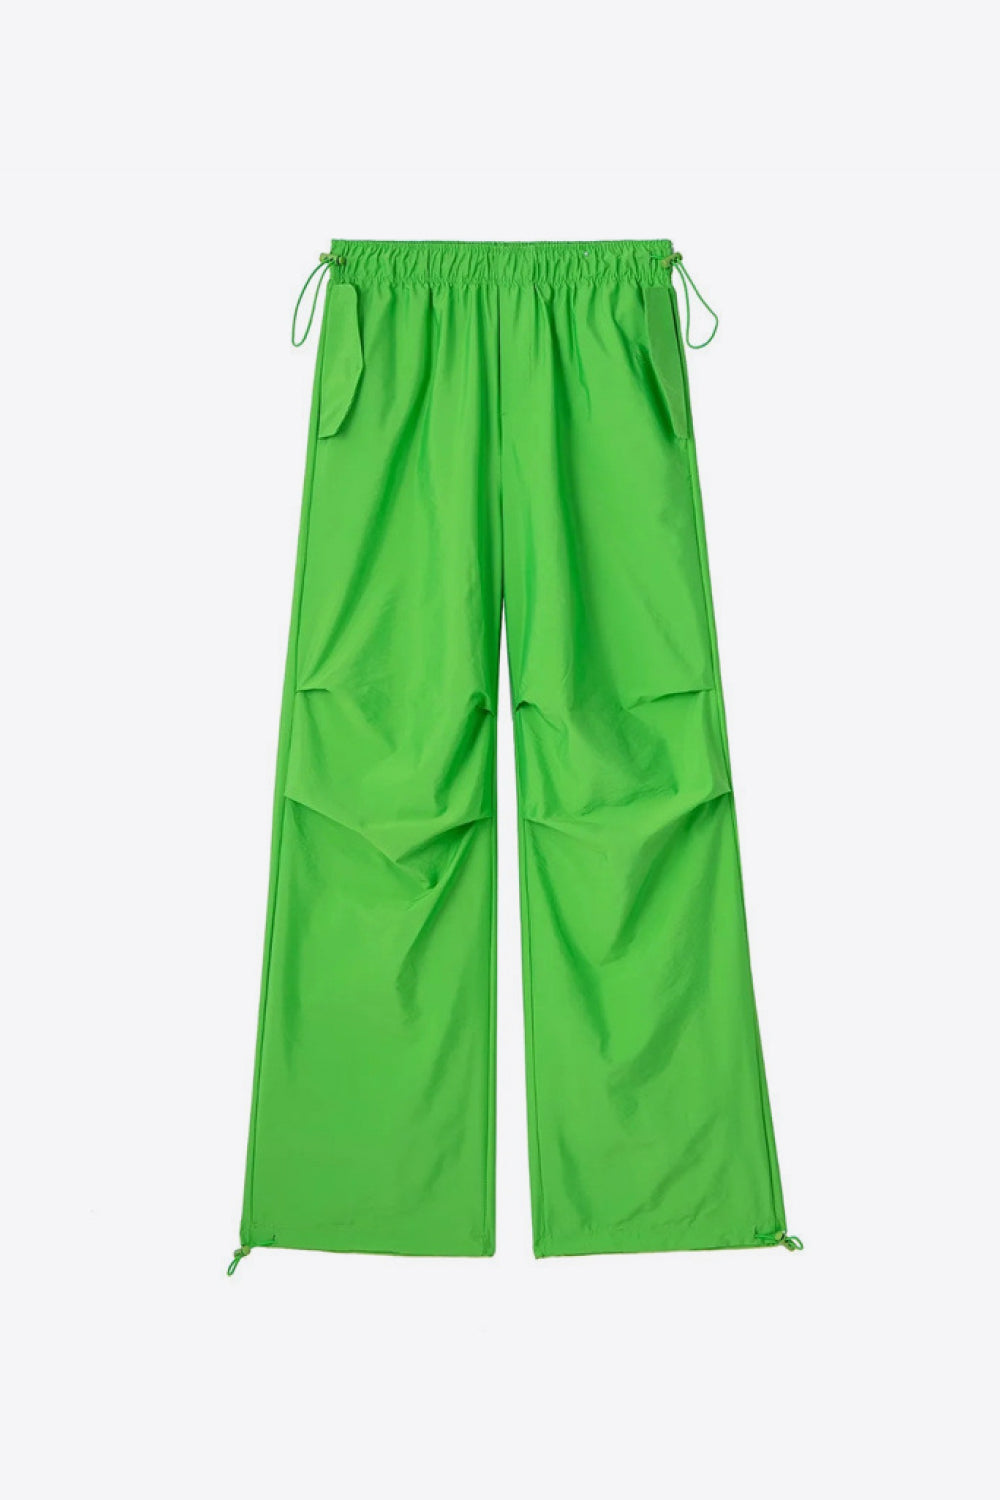 Drawstring Waist Pants with Pockets - Light Green / XS - Bottoms - Pants - 20 - 2024